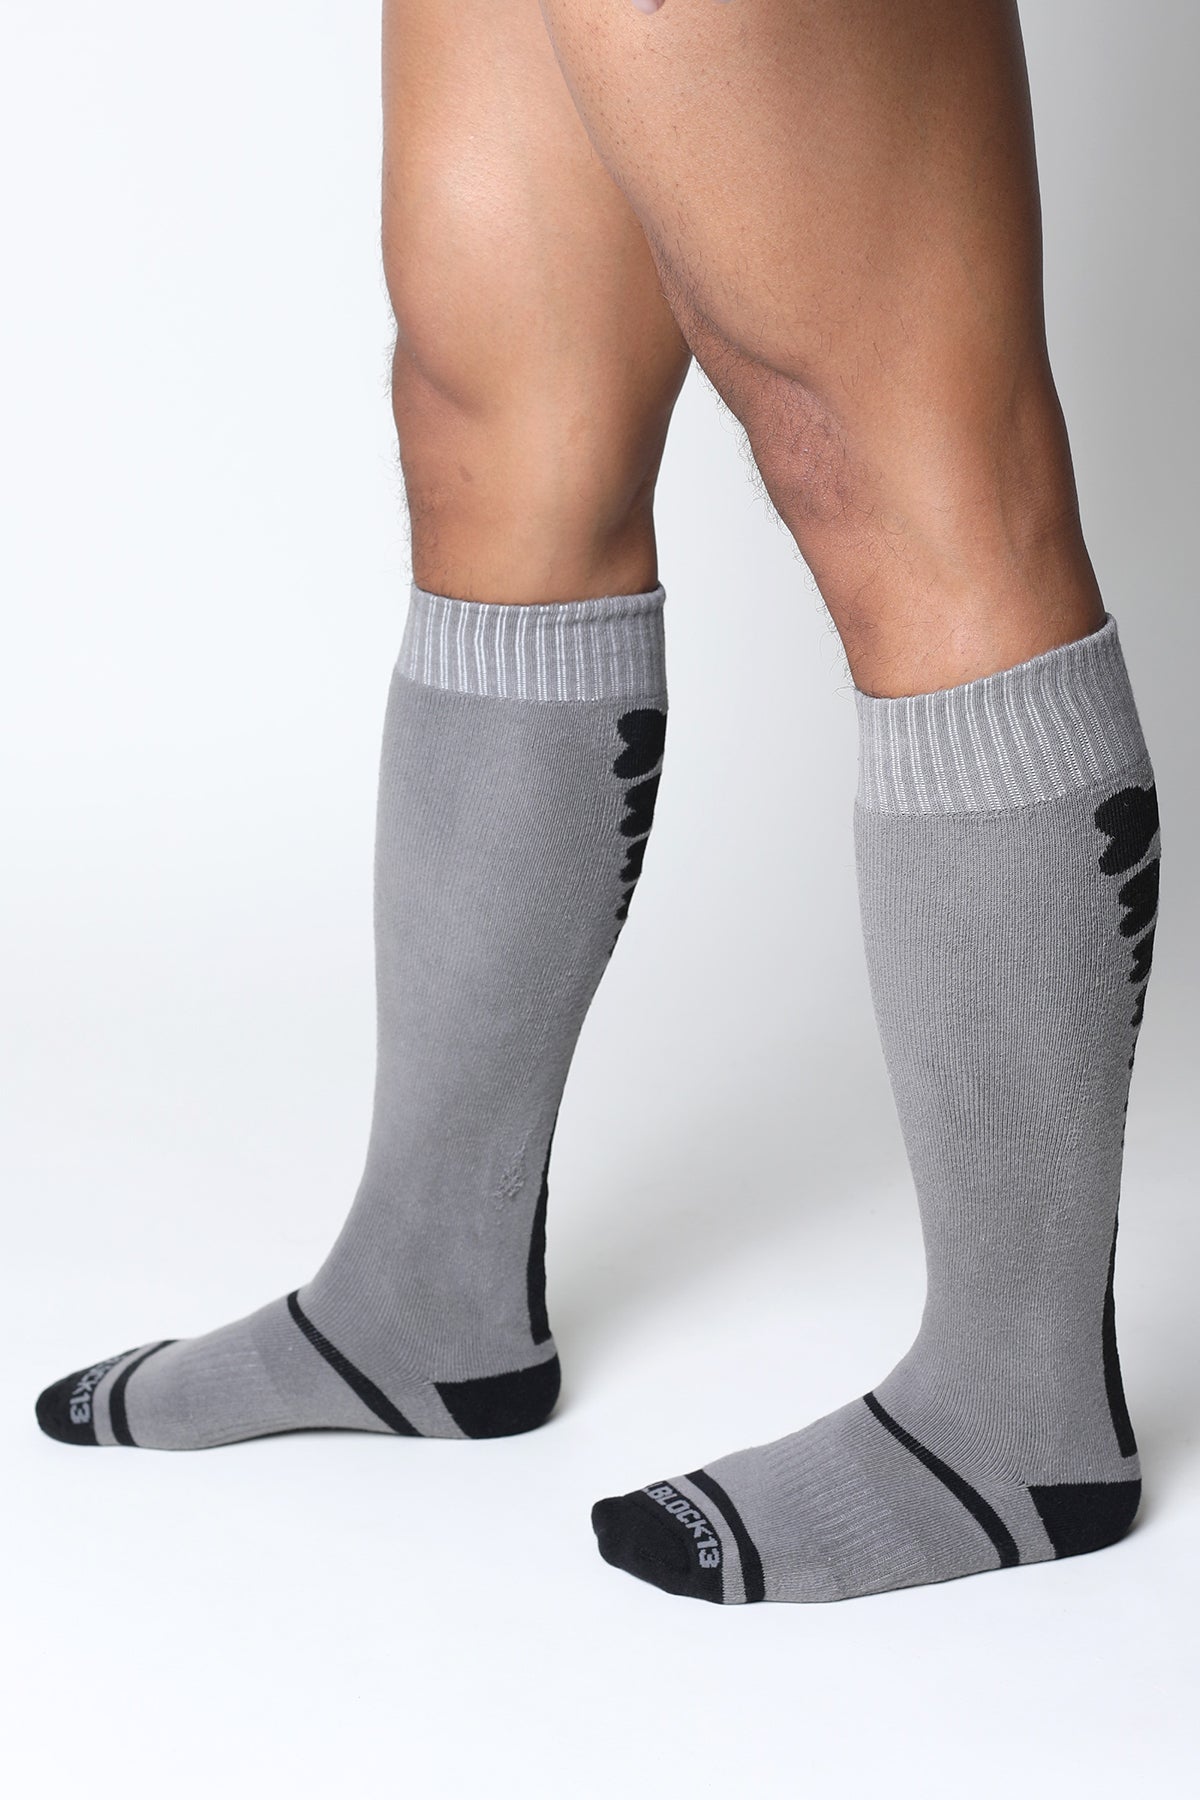 The Rise of the Knee-high Sock – SocksFox